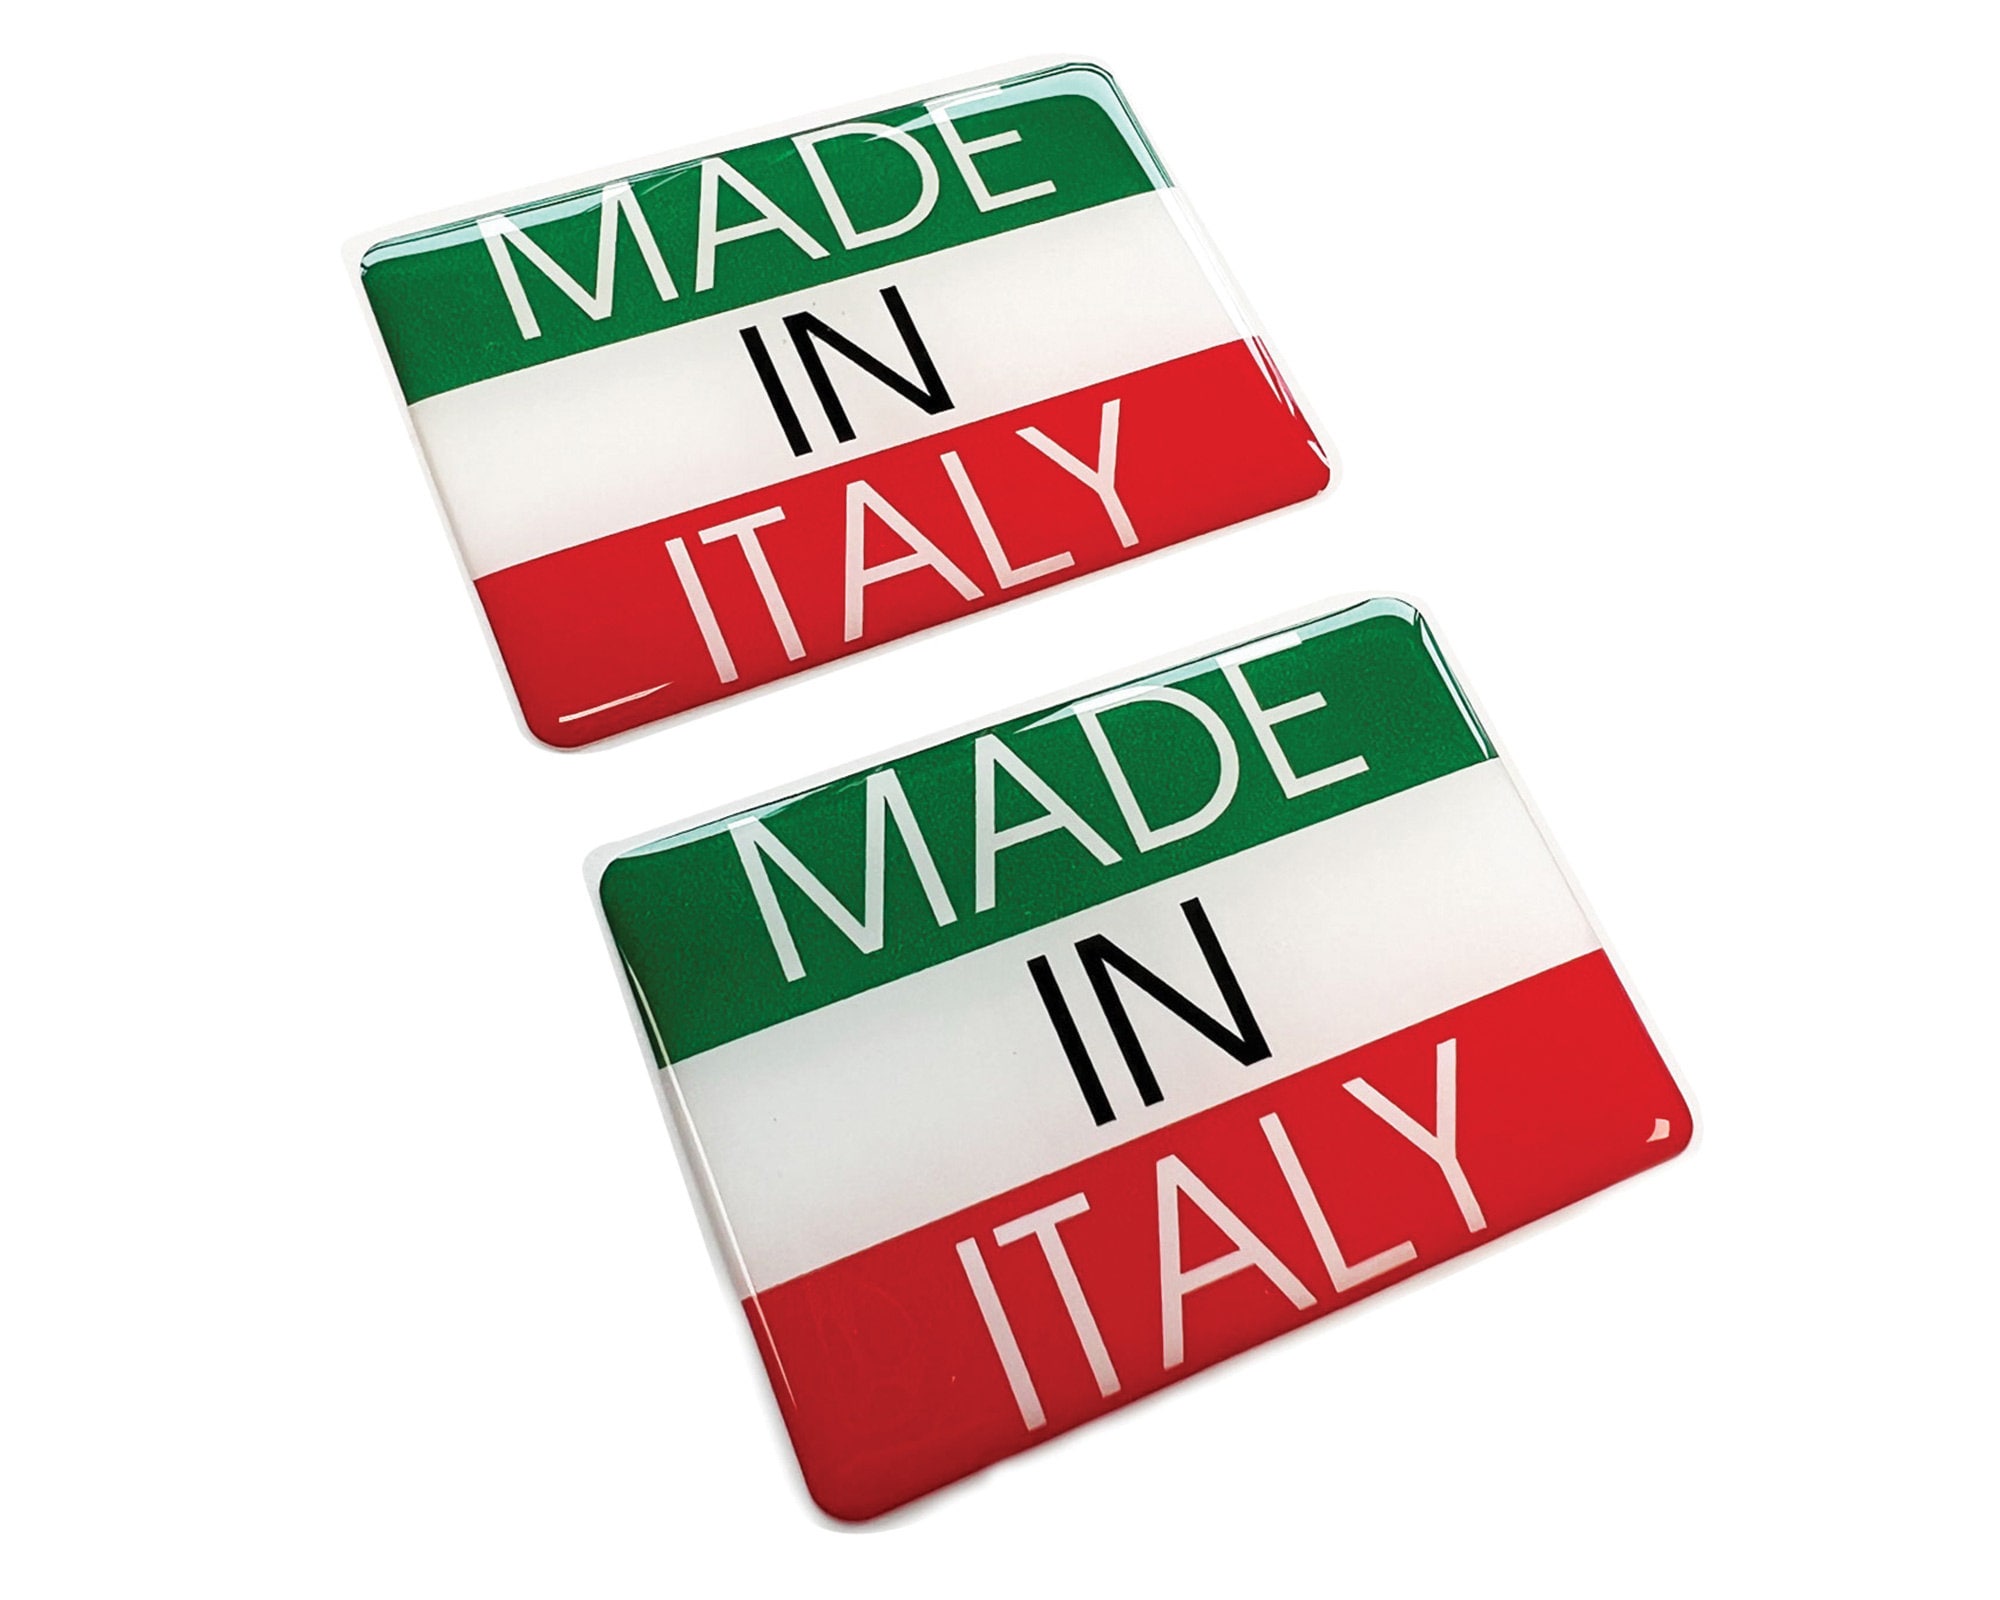 2 x Italien Flagge Aufkleber 40x32 mm oder 1 Stück 80x64 mm Aufkleber 3D  Harz Silikongel Aufkleber Italienische Flagge Auto Fahrrad - .de